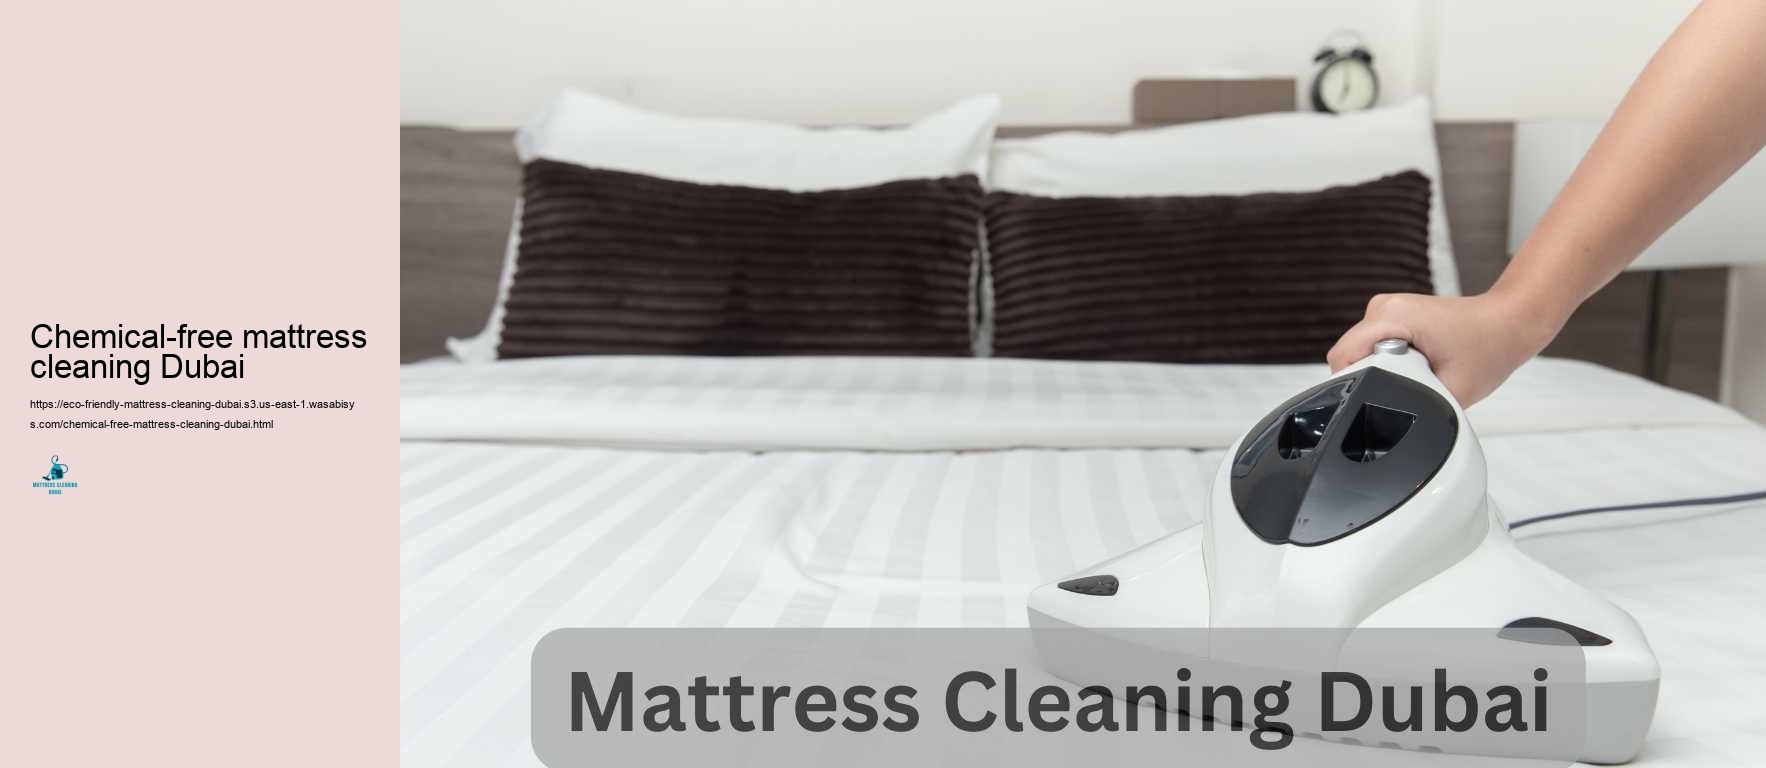 Chemical-free mattress cleaning Dubai